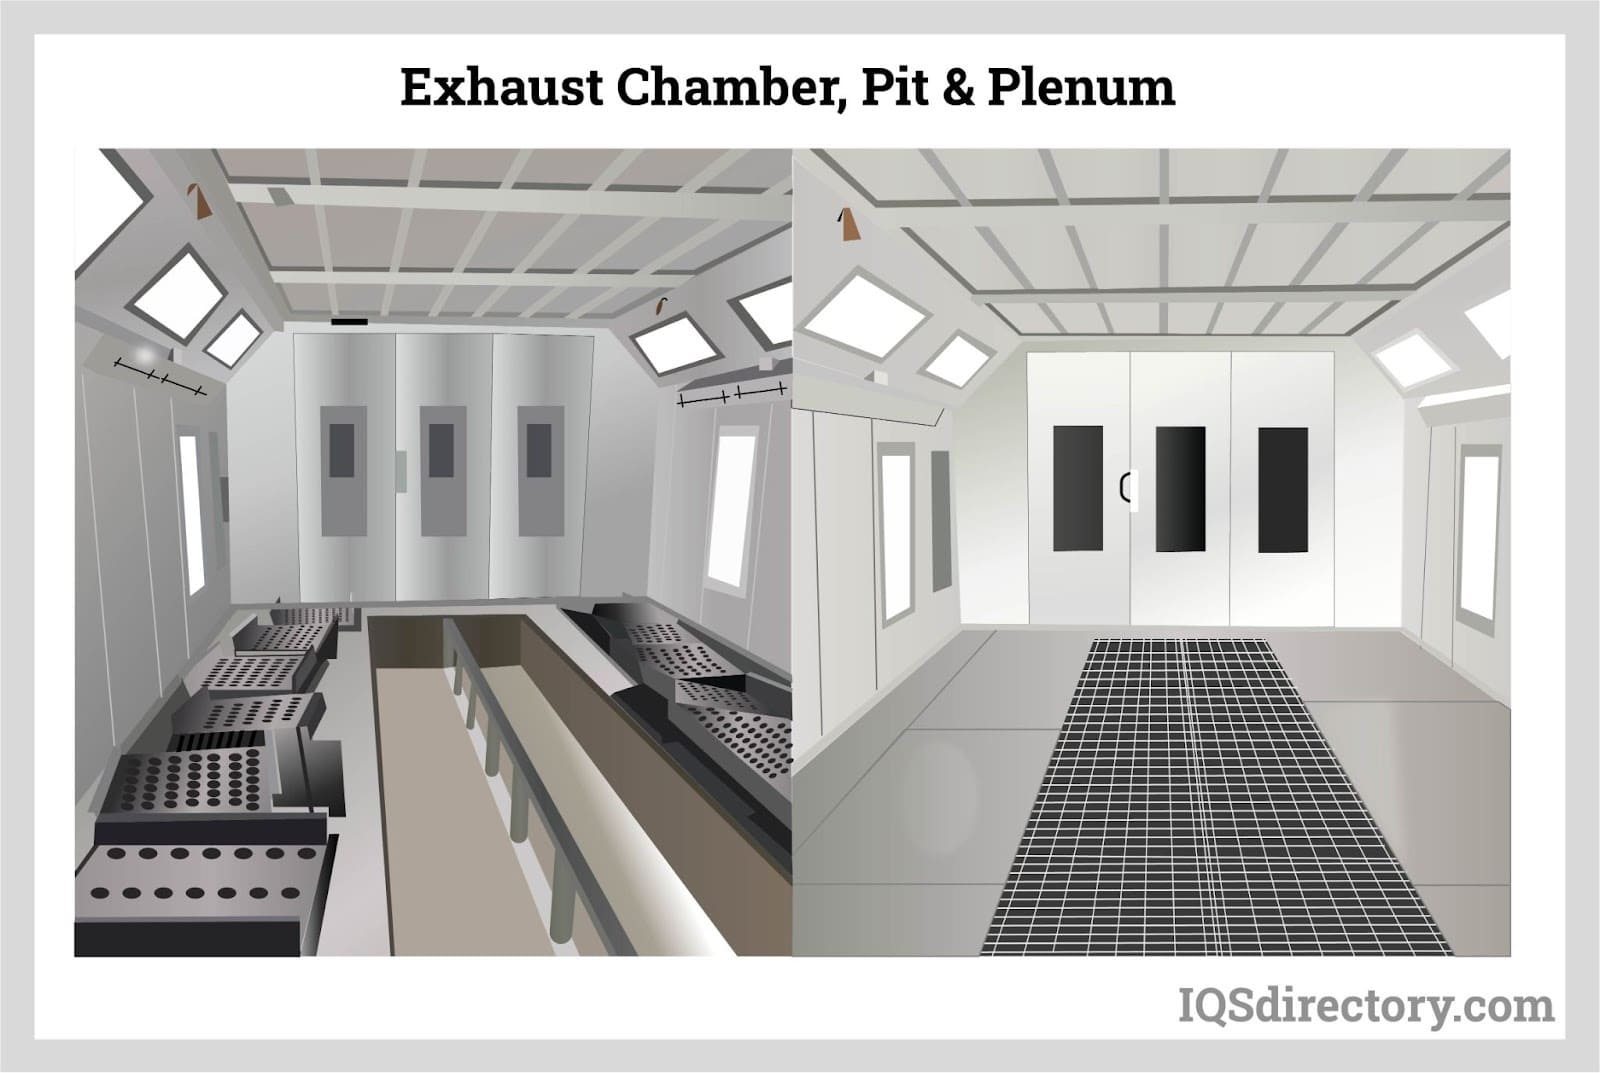  Exhaust Chamber, Pit & Plenum